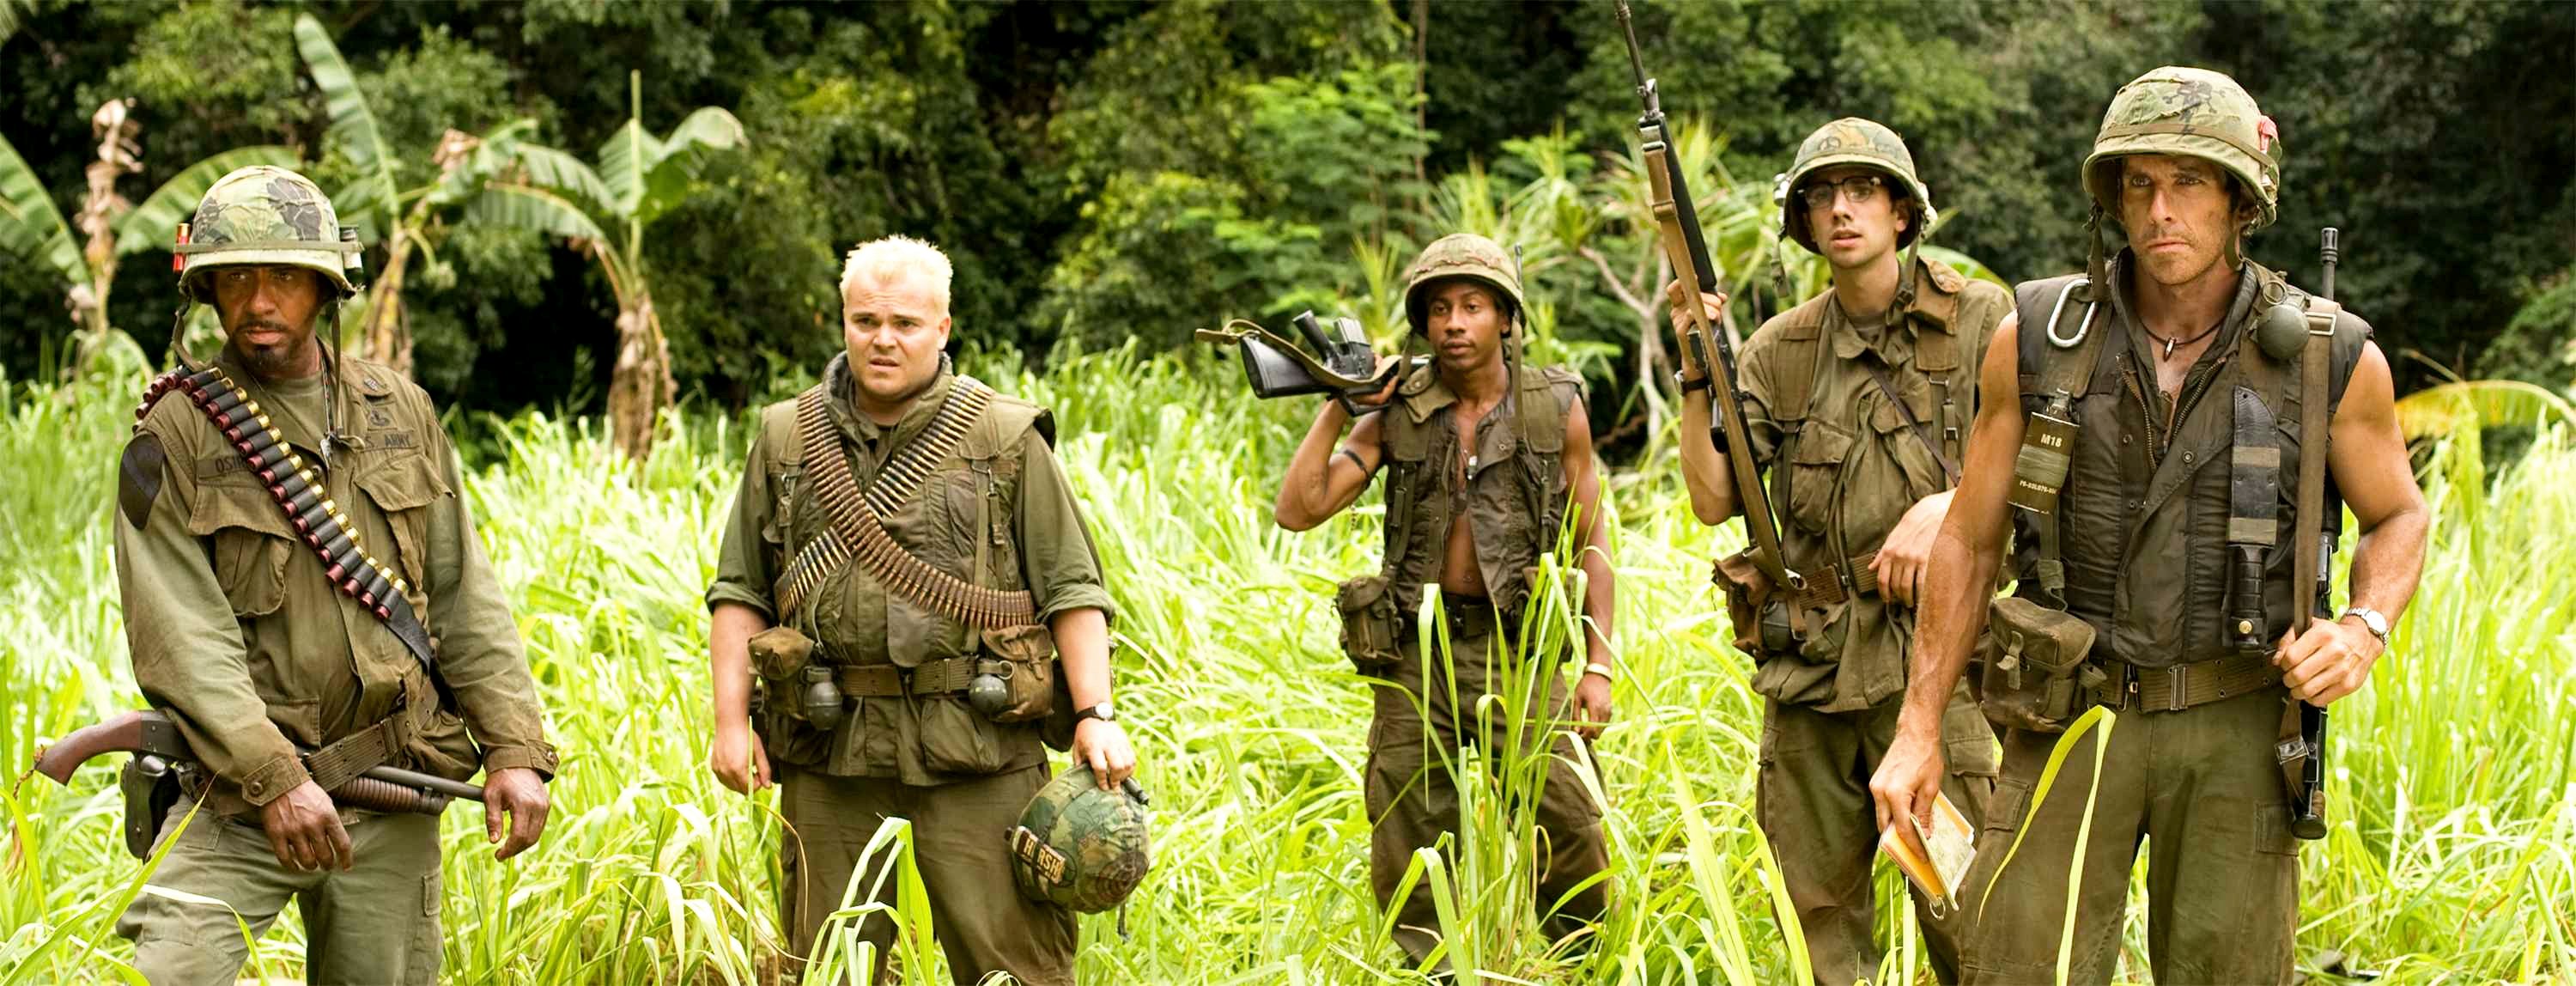 Robert Downey Jr., Jack Black, Brandon Jackson, Jay Baruchel and Ben Stiller in DreamWorks Pictures' Tropic Thunder (2008)